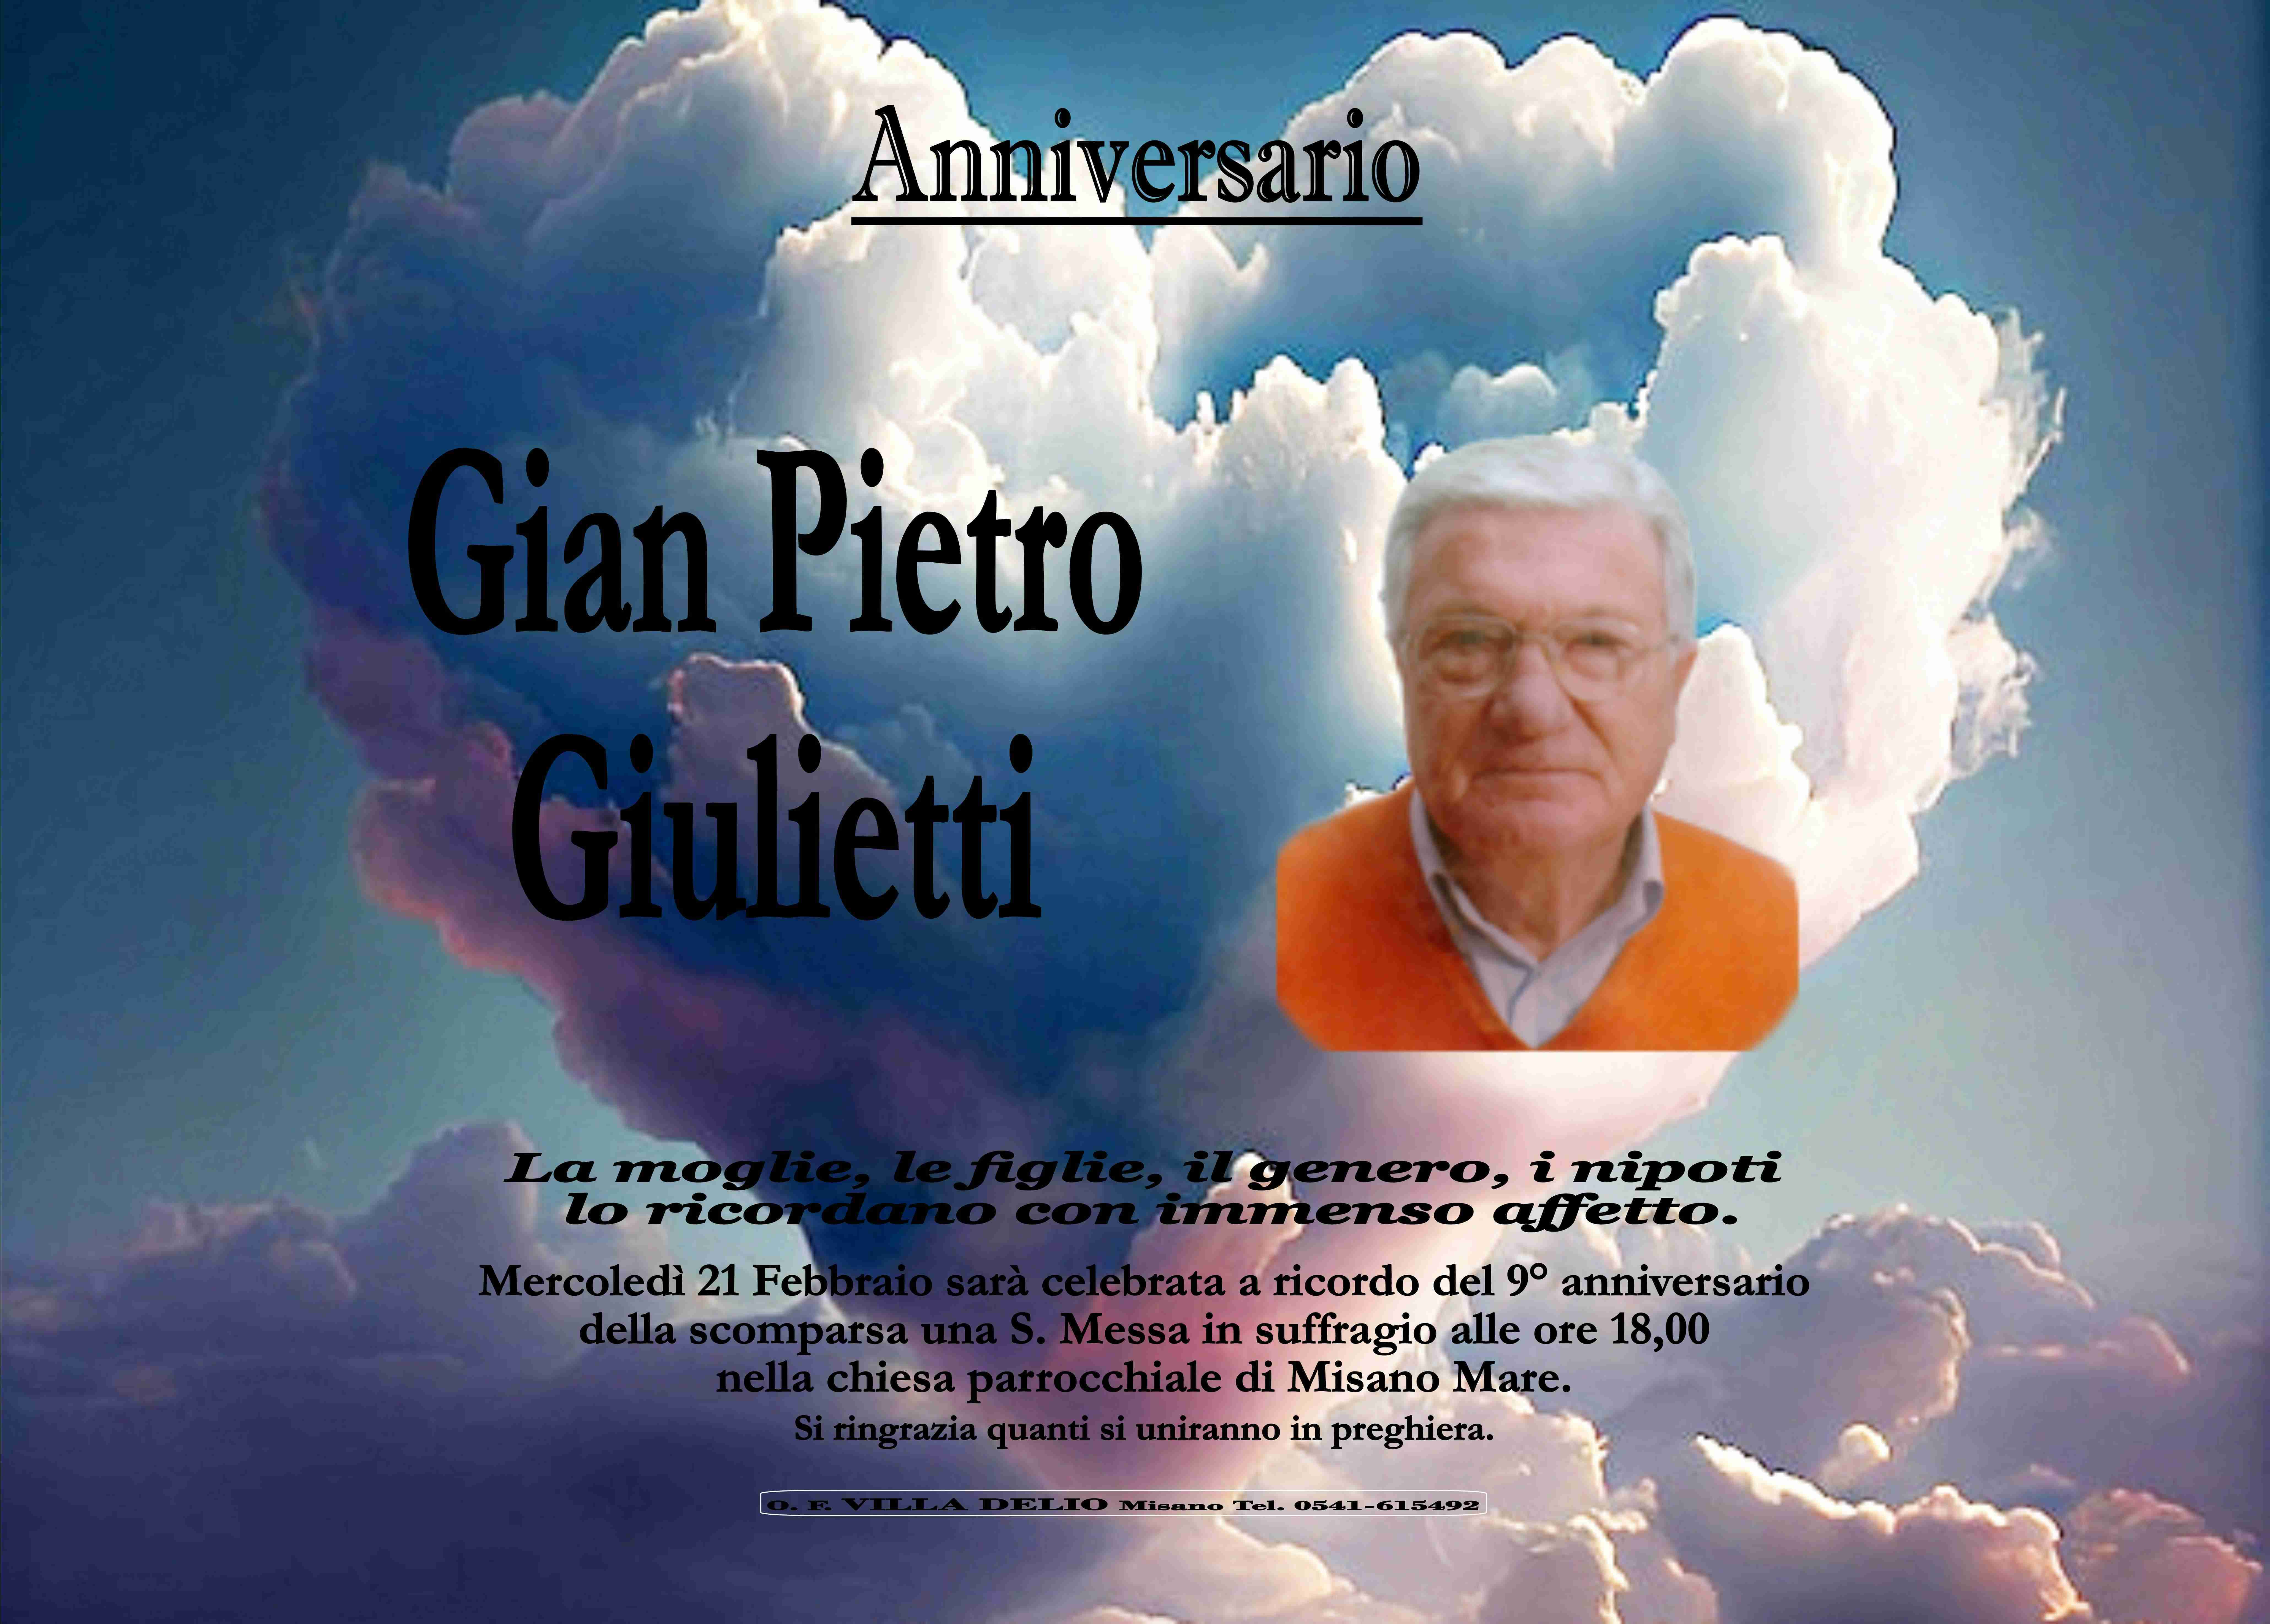 Gian Pietro Giulietti